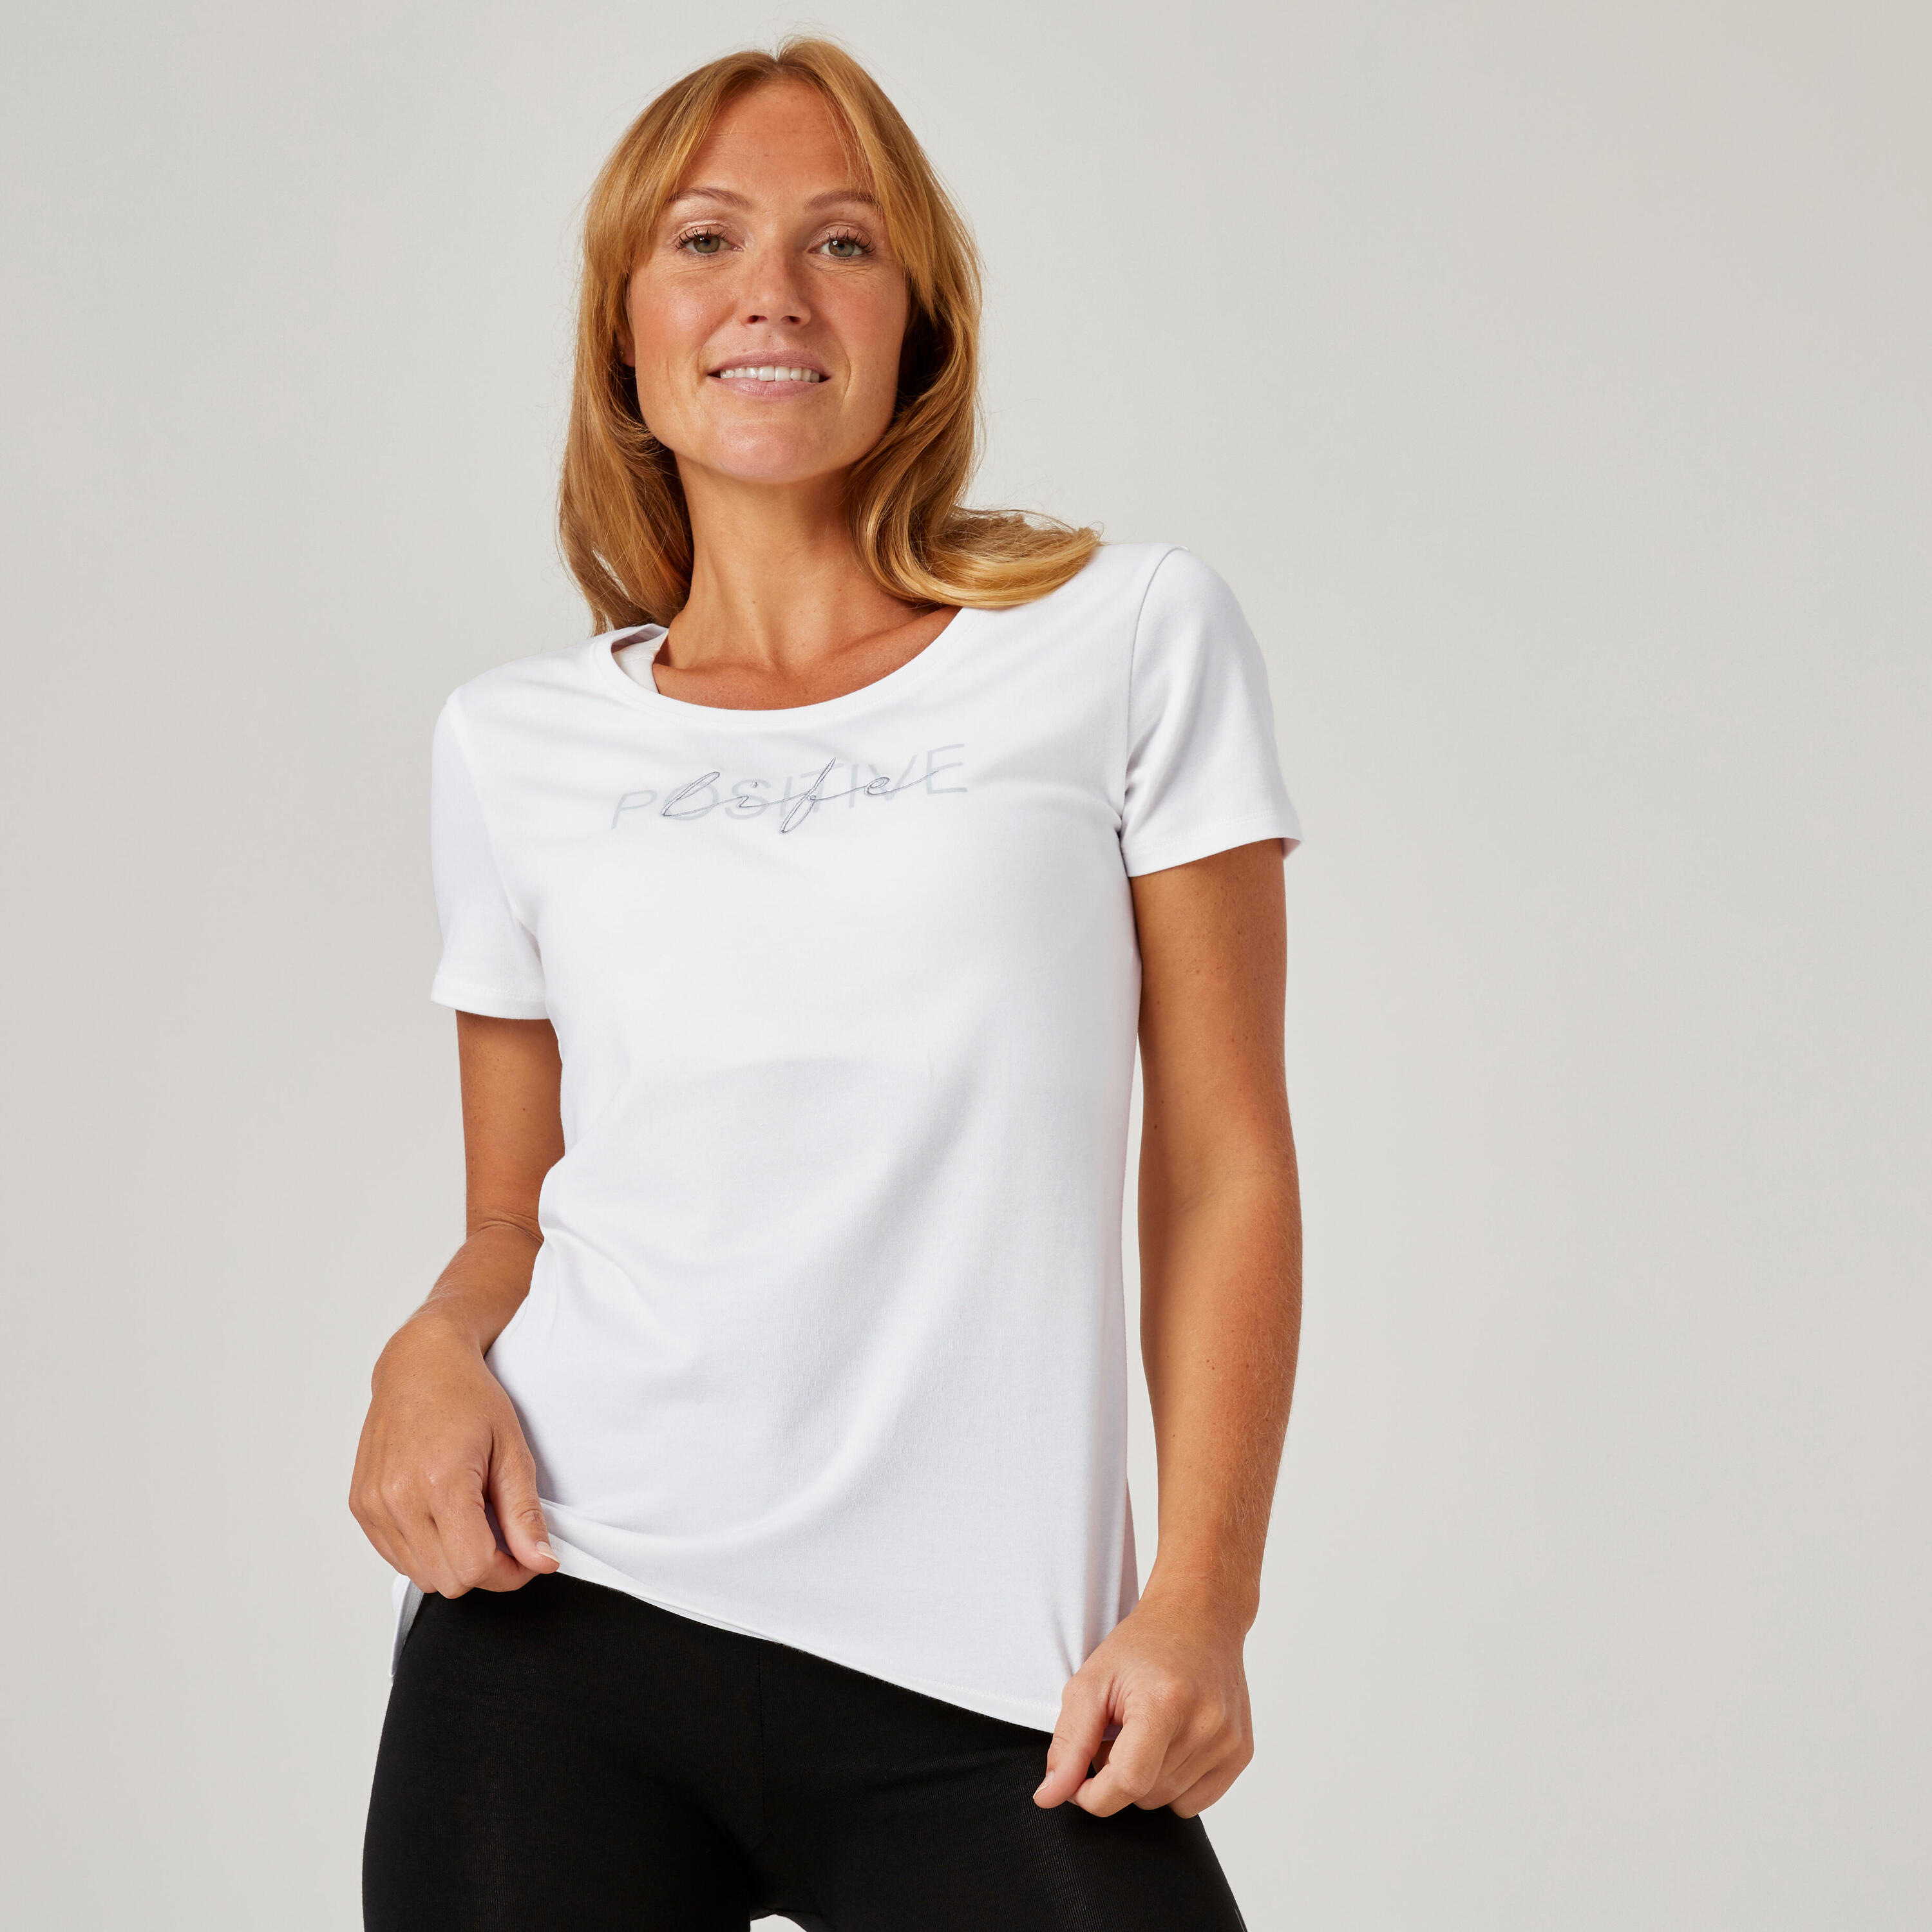 Women's Short-Sleeved Crew Neck Cotton Fitness T-Shirt 500 - Glacier White 1/4